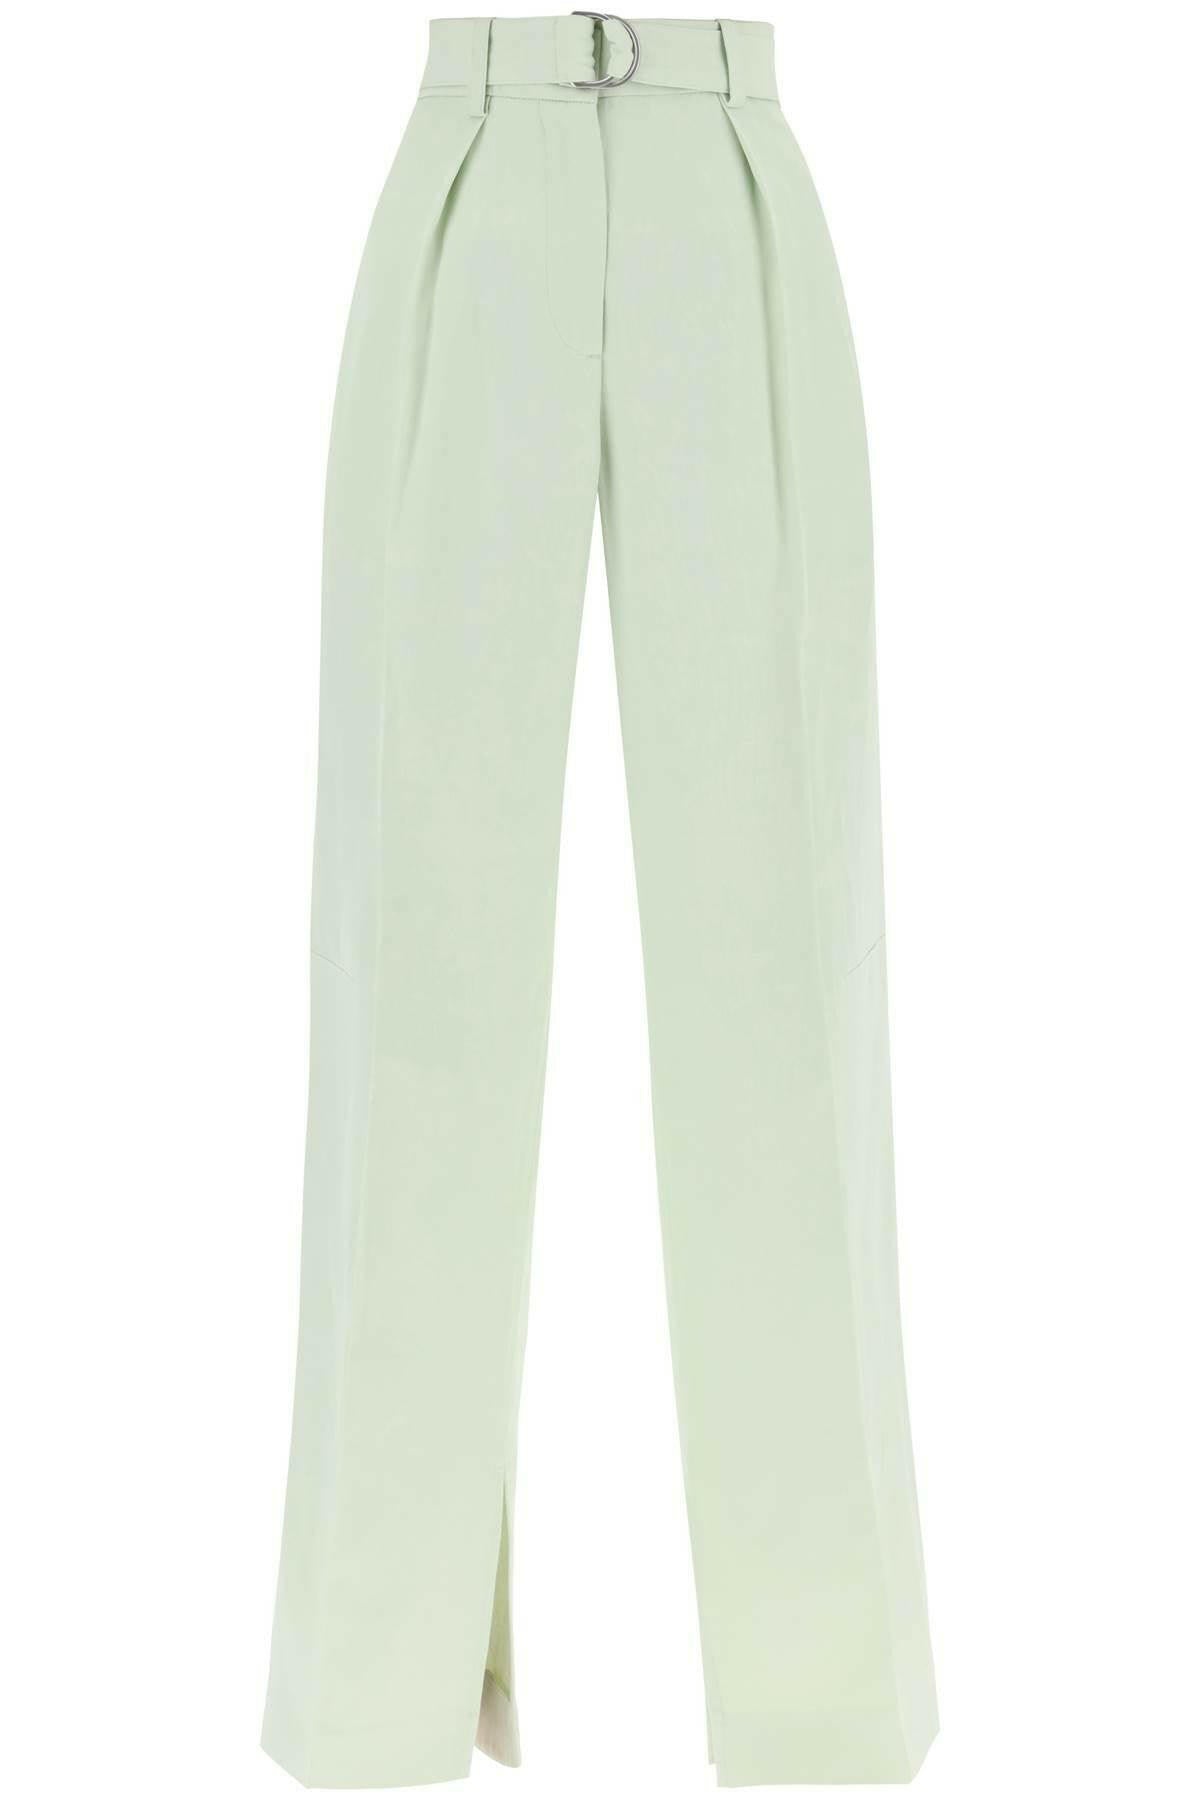 Pale Green Linen-Blend Belted Trousers JIL SANDER JOHN JULIA.